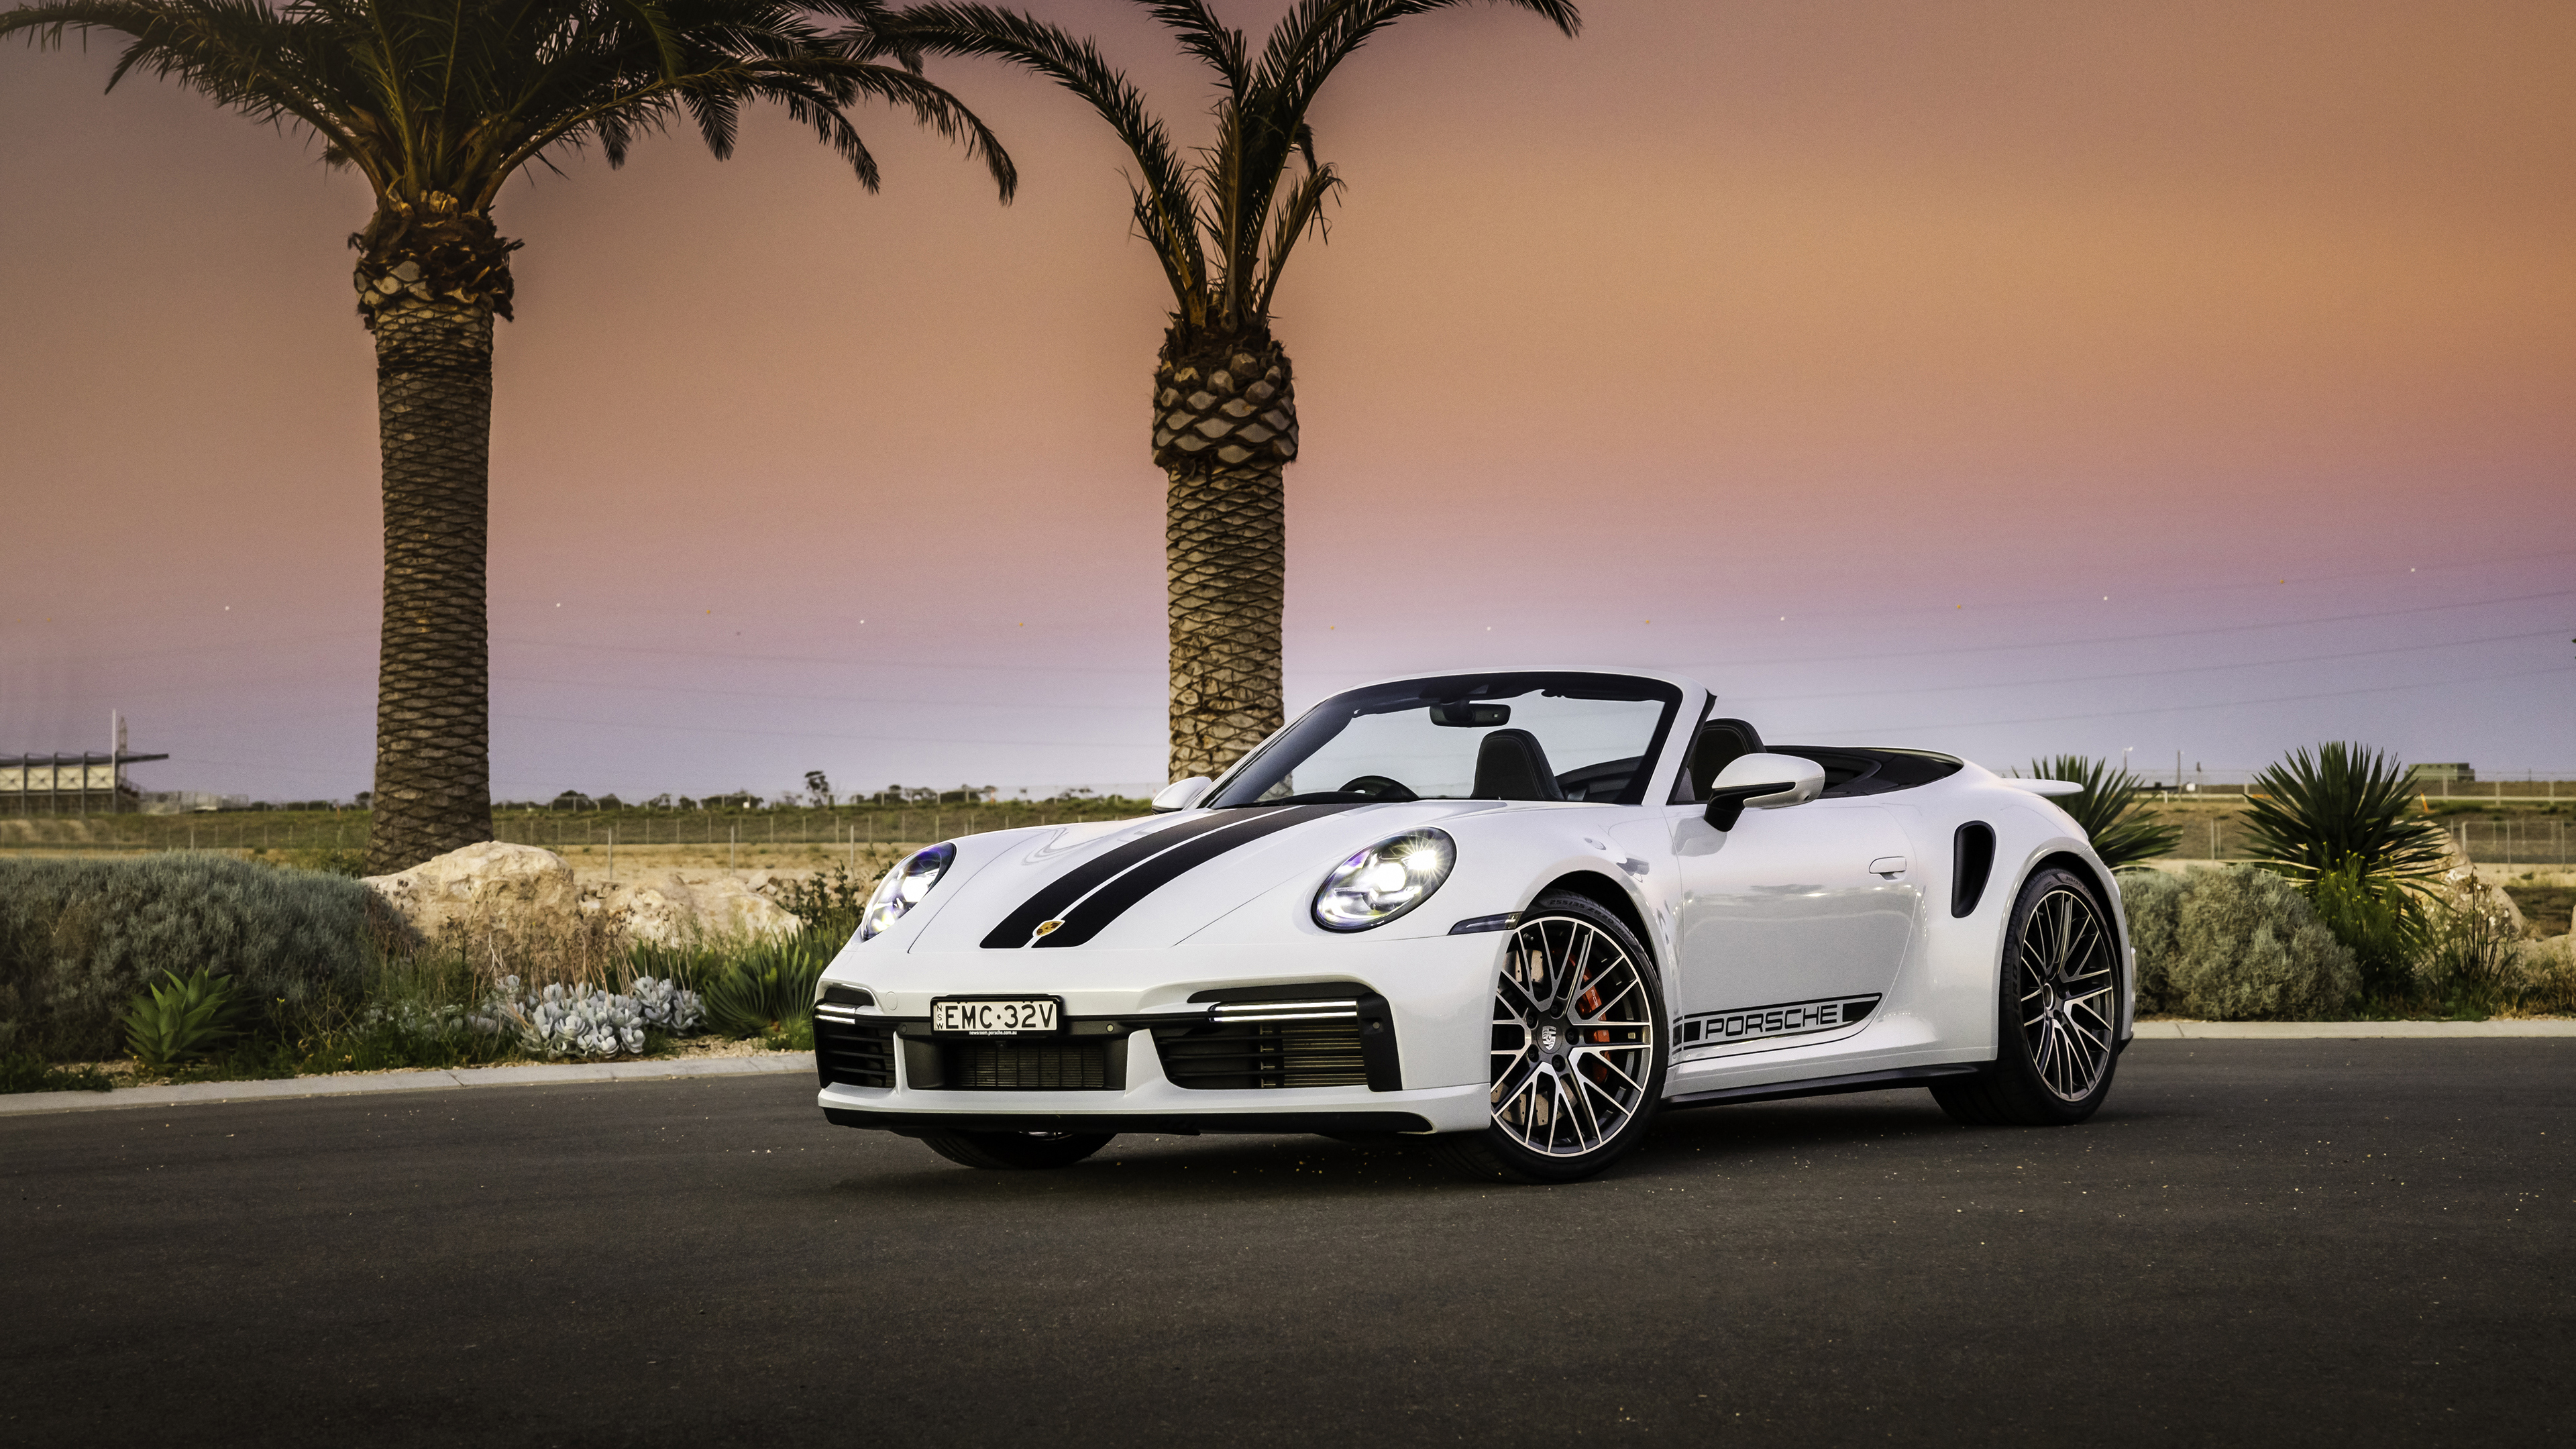 Porsche Porsche 911 Porsche Turbo Cabriolet Convertible Sports Car White Cars Sunset Desert Palm Tre 3840x2160